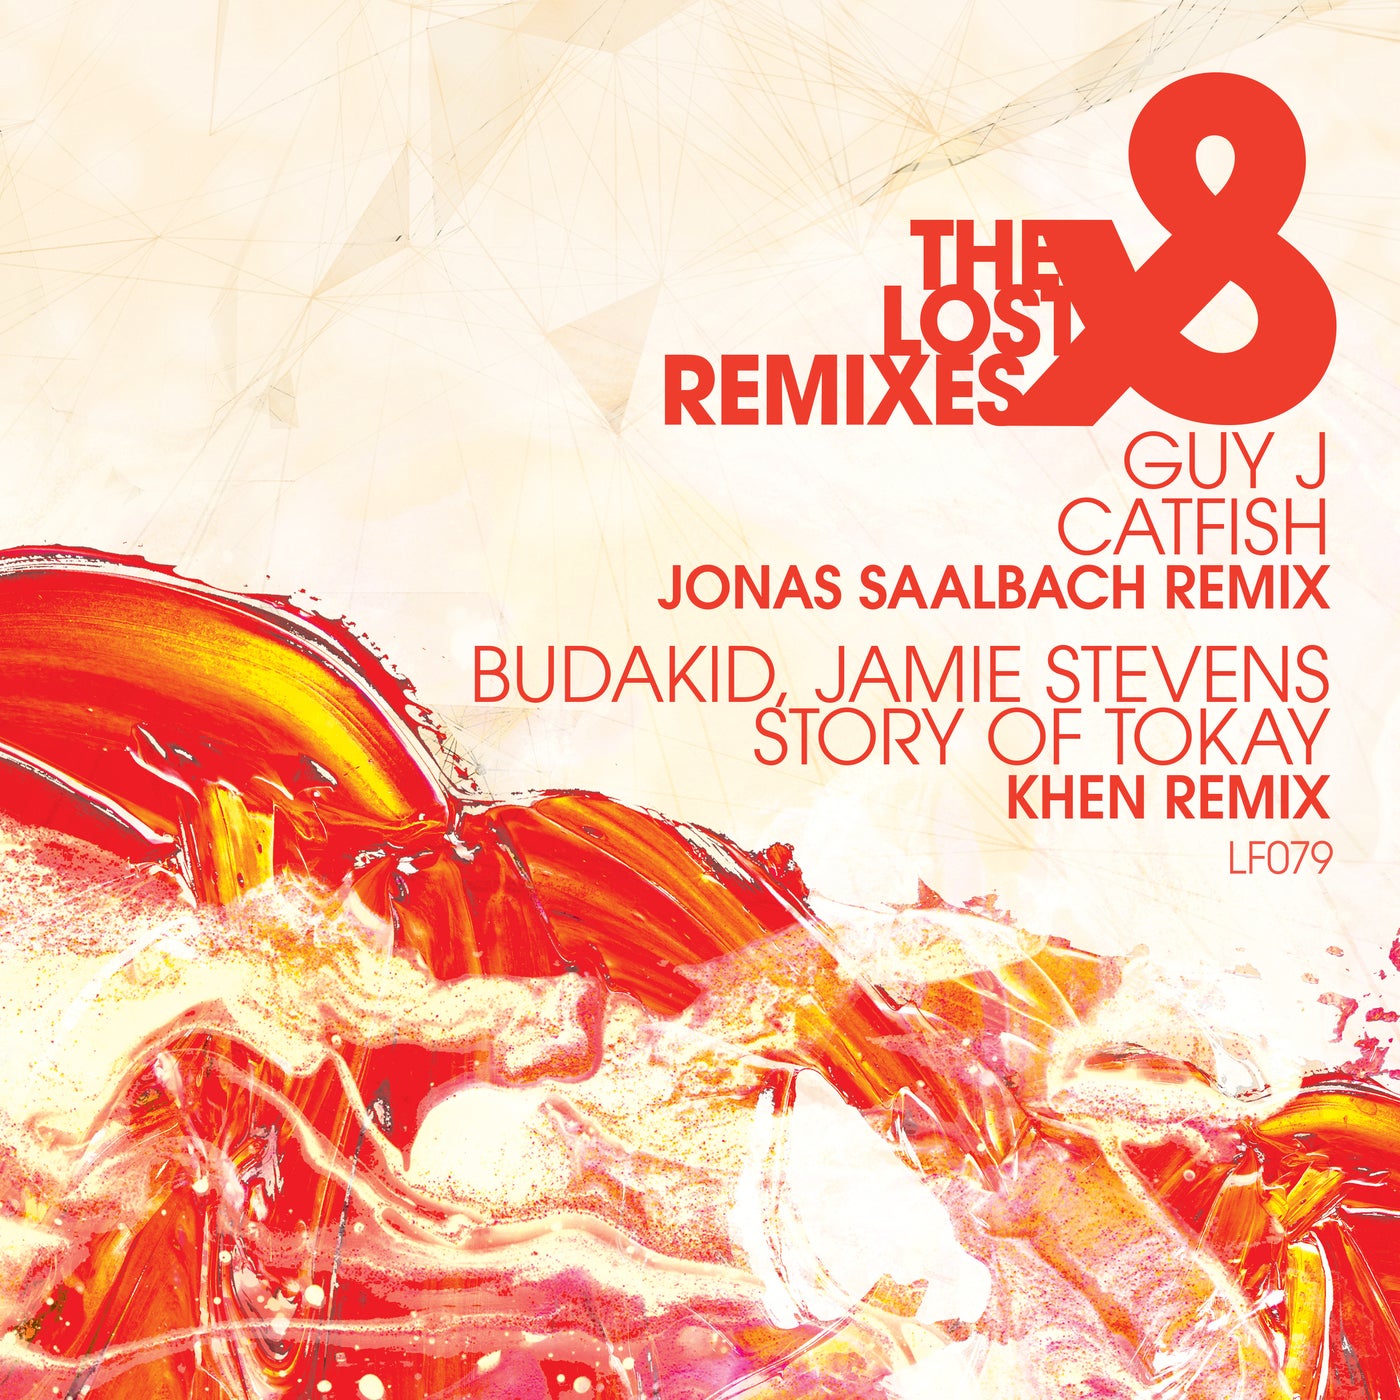 image cover: Guy J, Jamie Stevens, Budakid - The Lost Remixes / LF079D